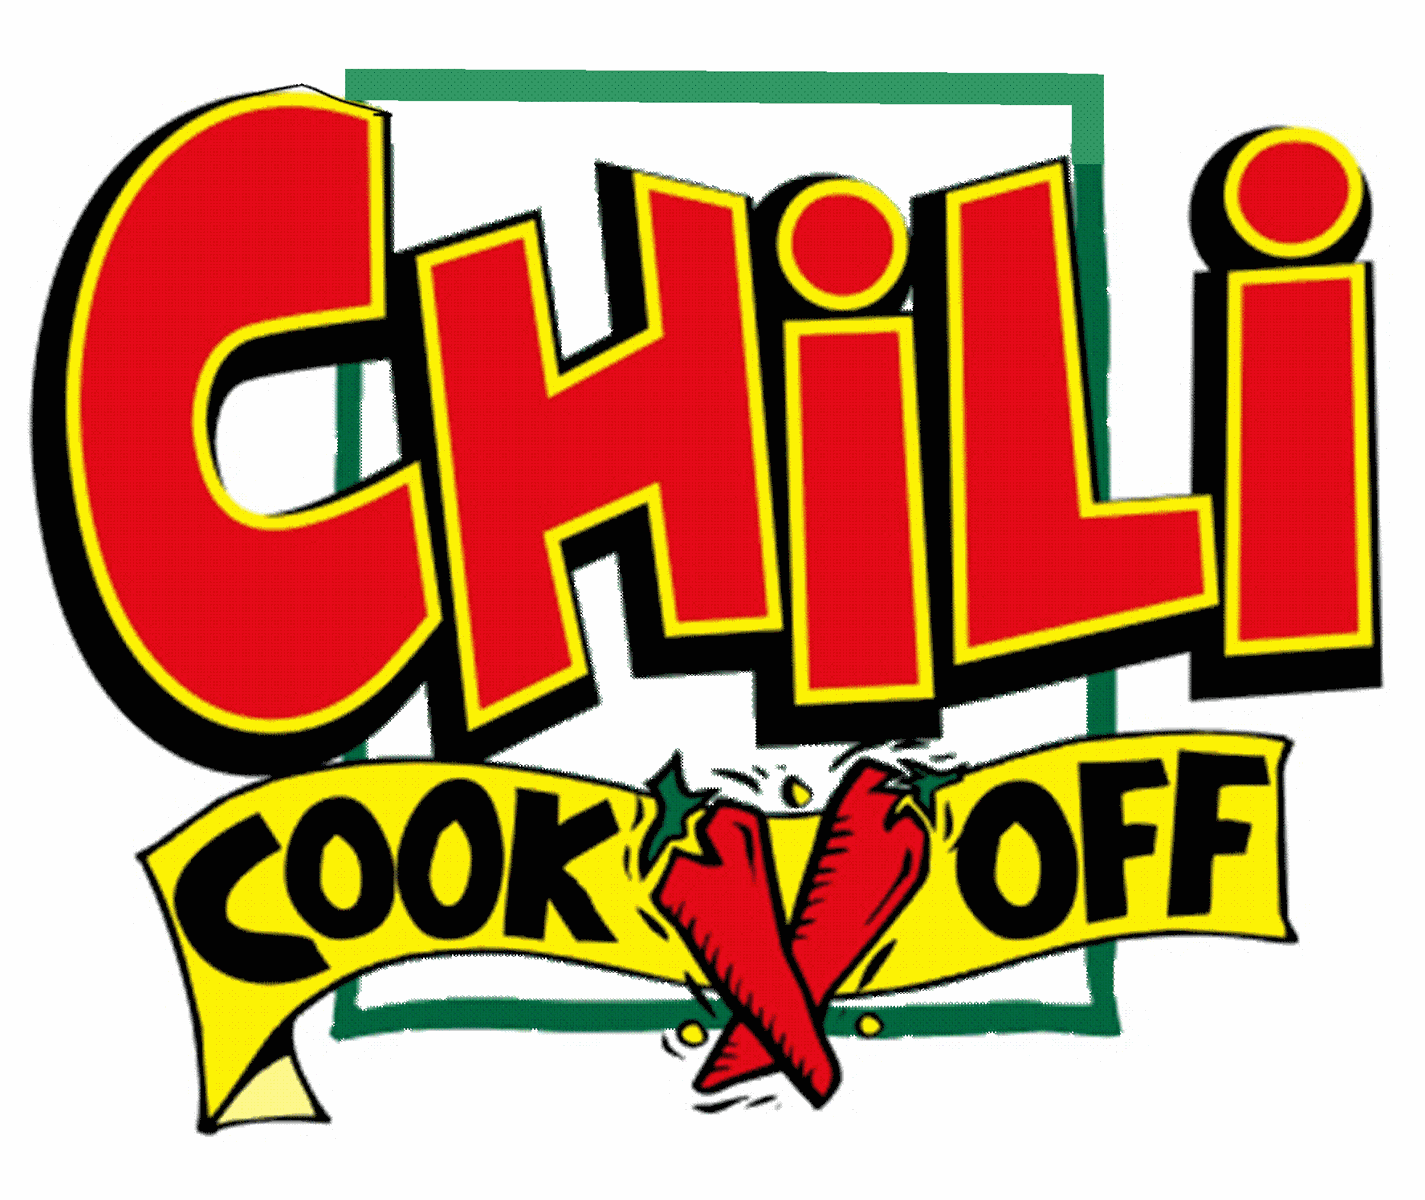 chili cook off cartoon